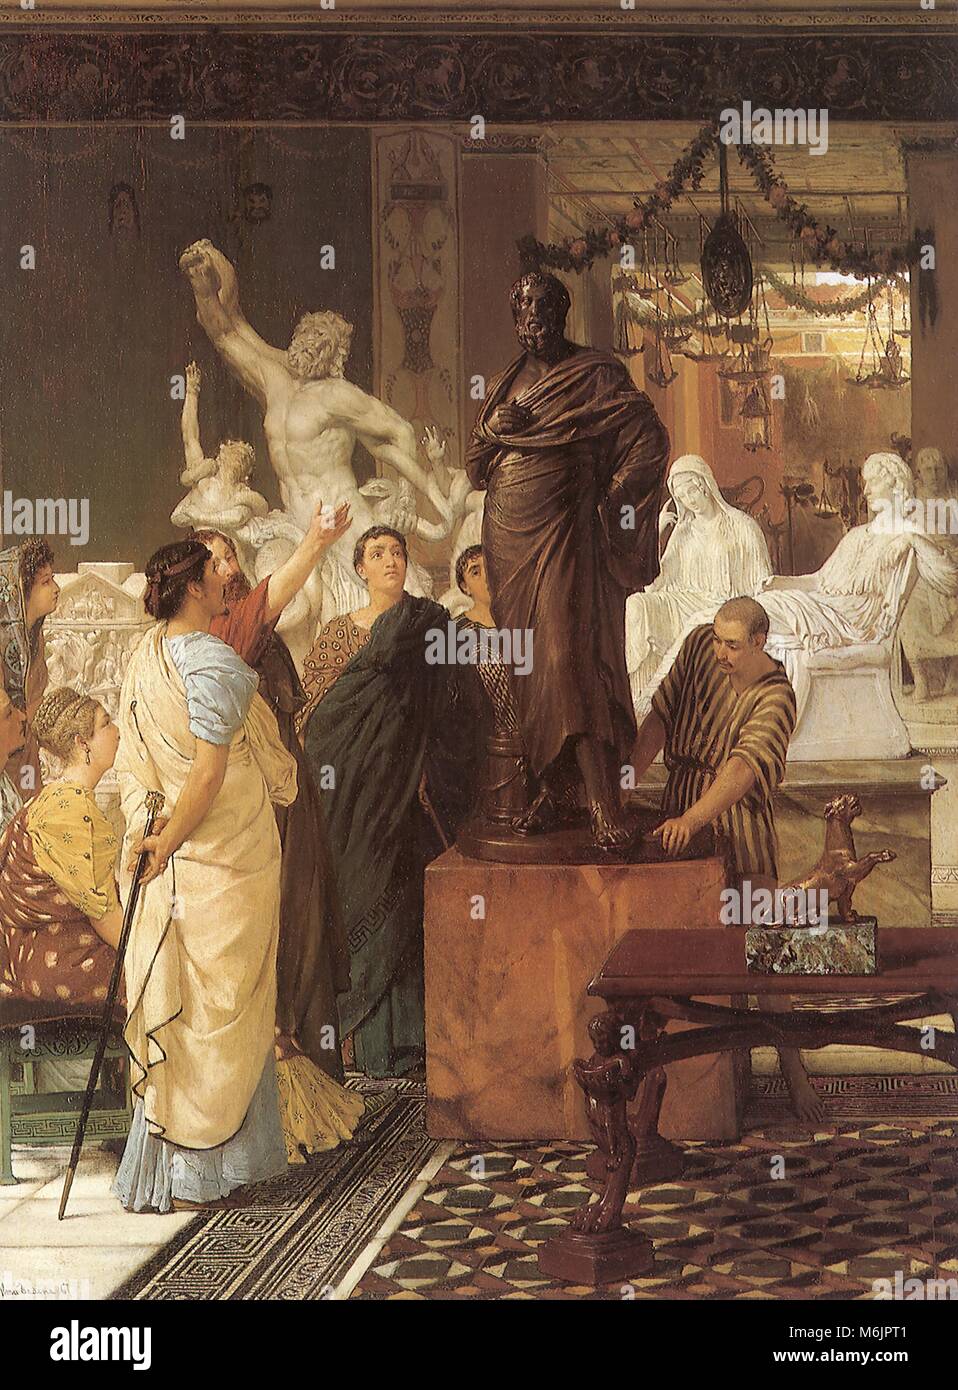 Galerie de sculpture romaine, Alma-Tadema, Sir Lawrence, 1867. Banque D'Images